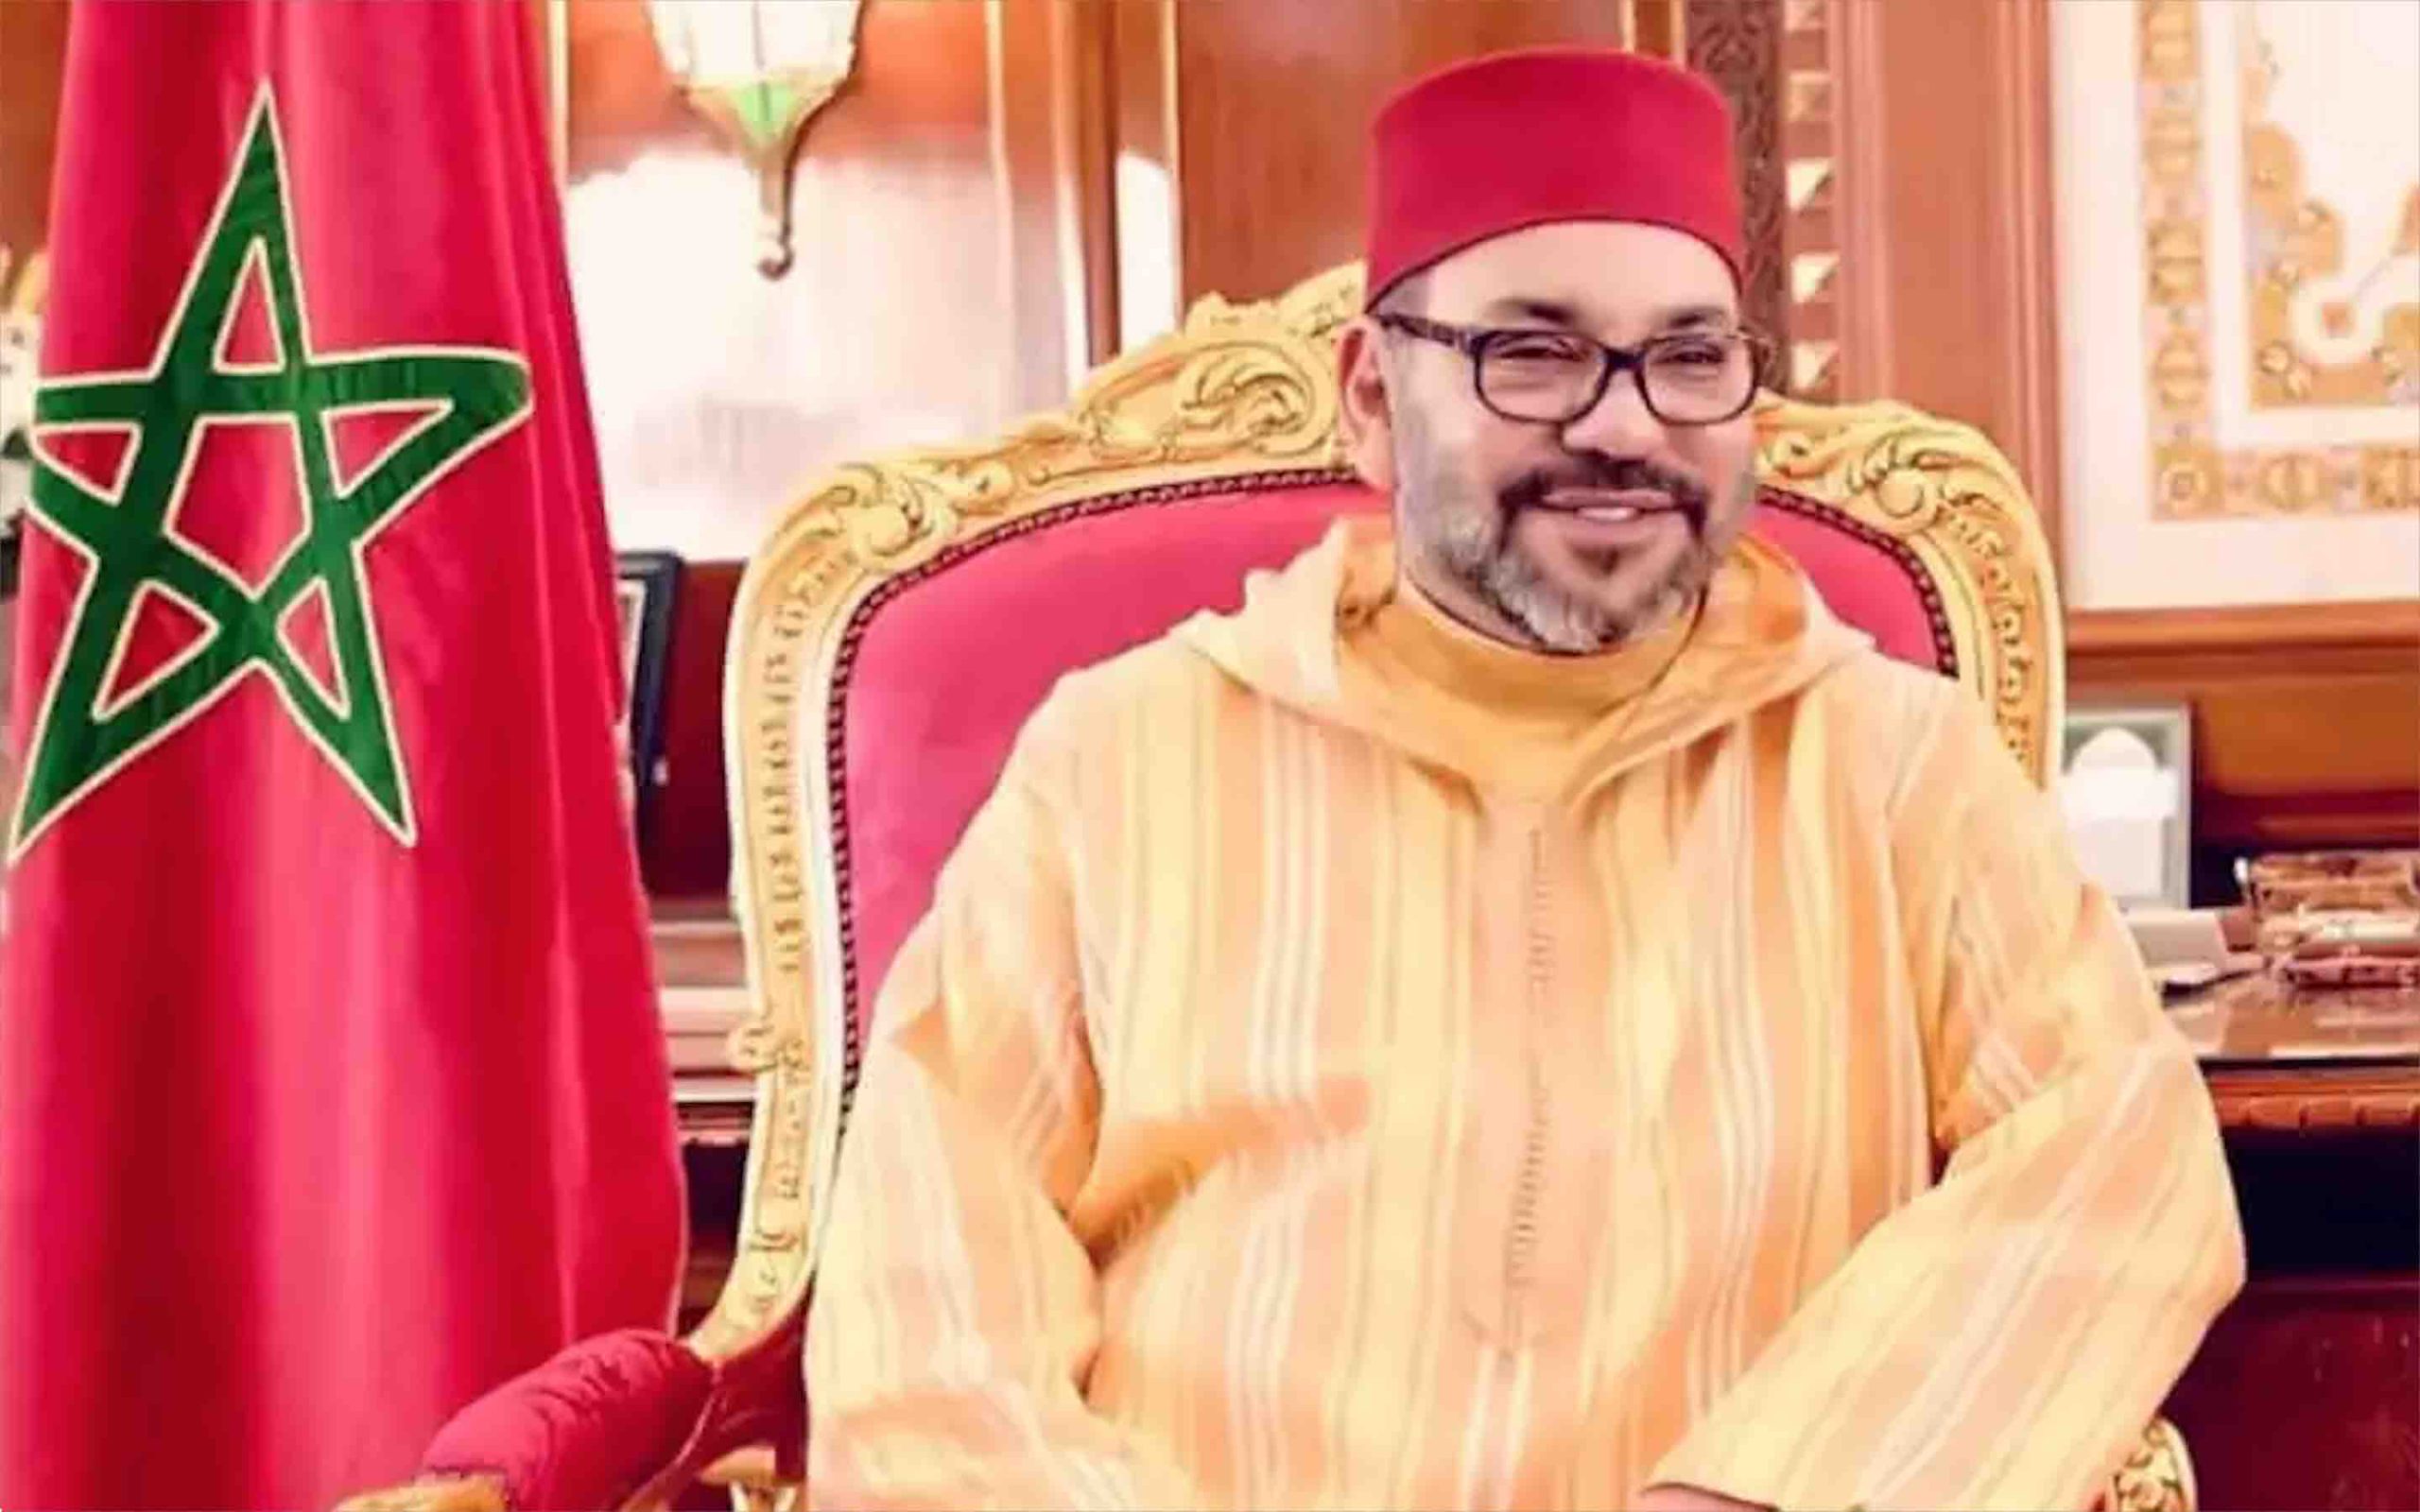 Le roi du Maroc Mohammed 6 Morocco King M6